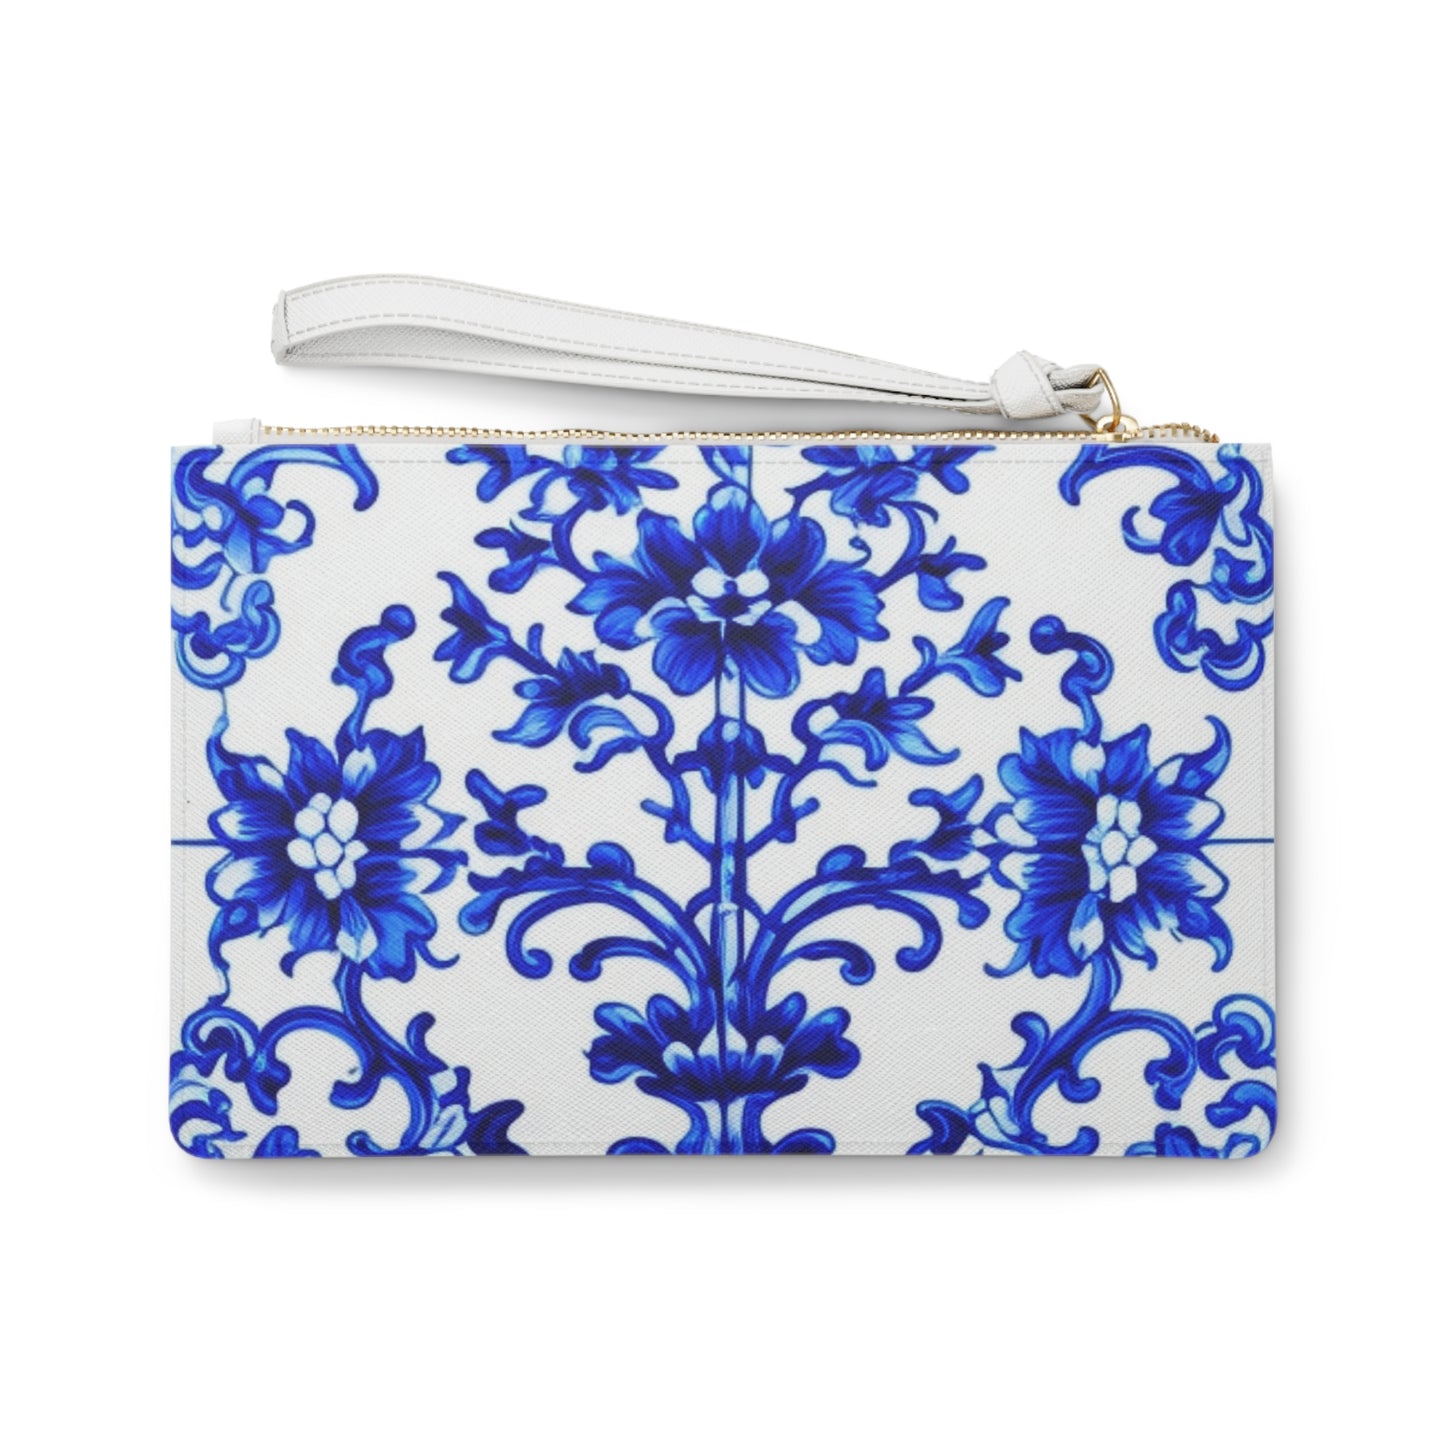 Portuguese Blue and White Tile Pattern Errands Makeup Evening Pouch Clutch Bag